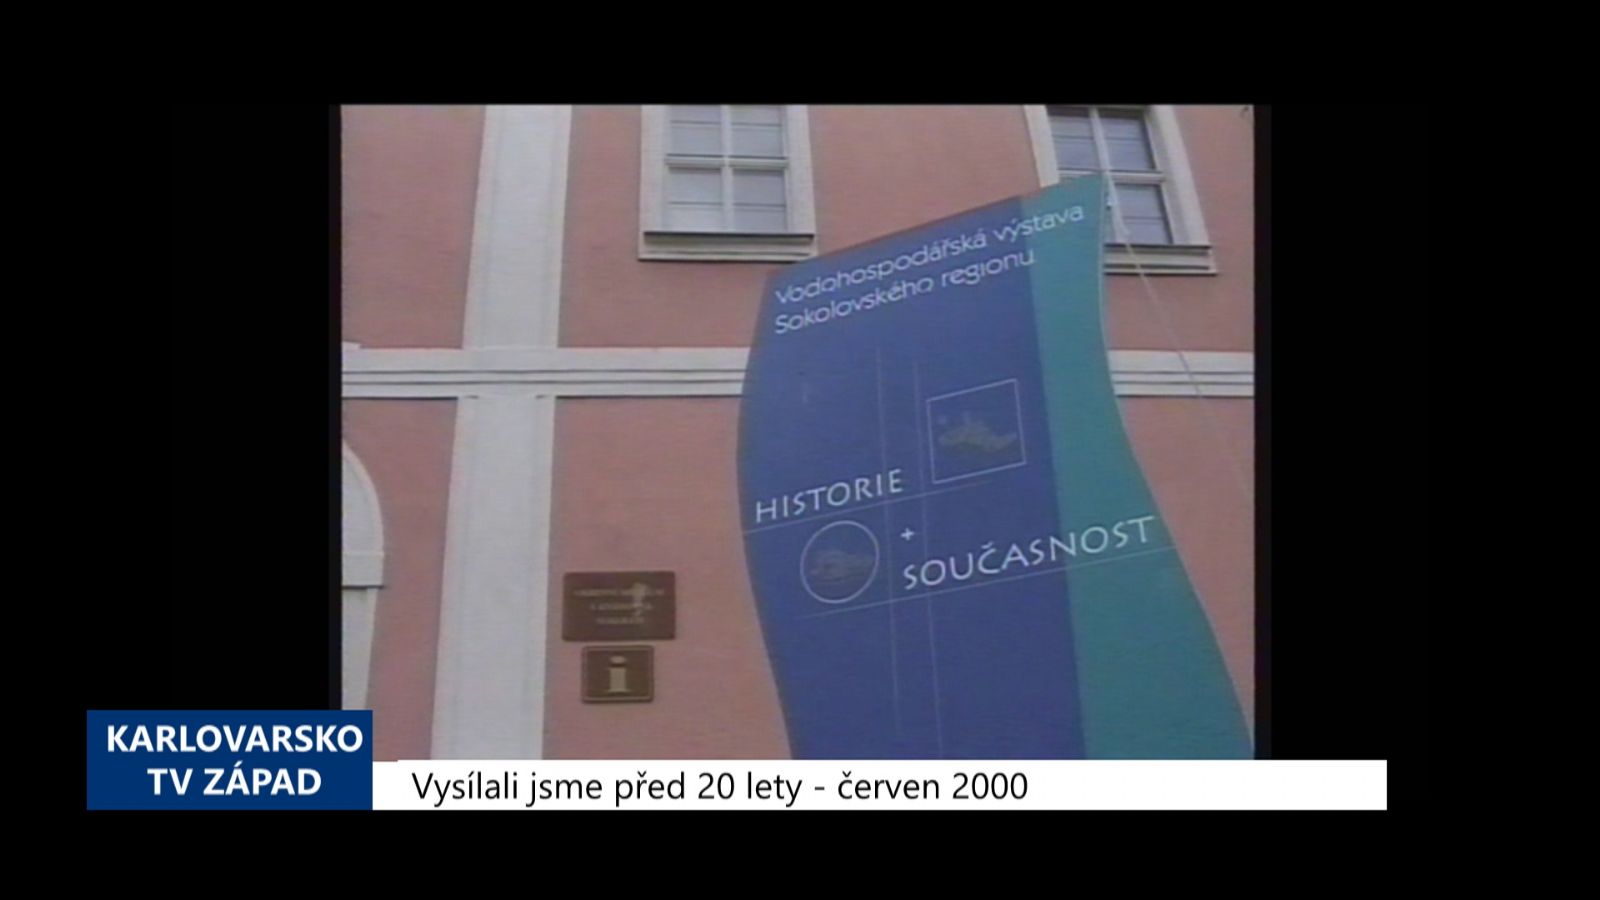 2000 – Sokolov: V zámečku je k vidění rozvoj vodohospodářské činnosti (TV Západ)